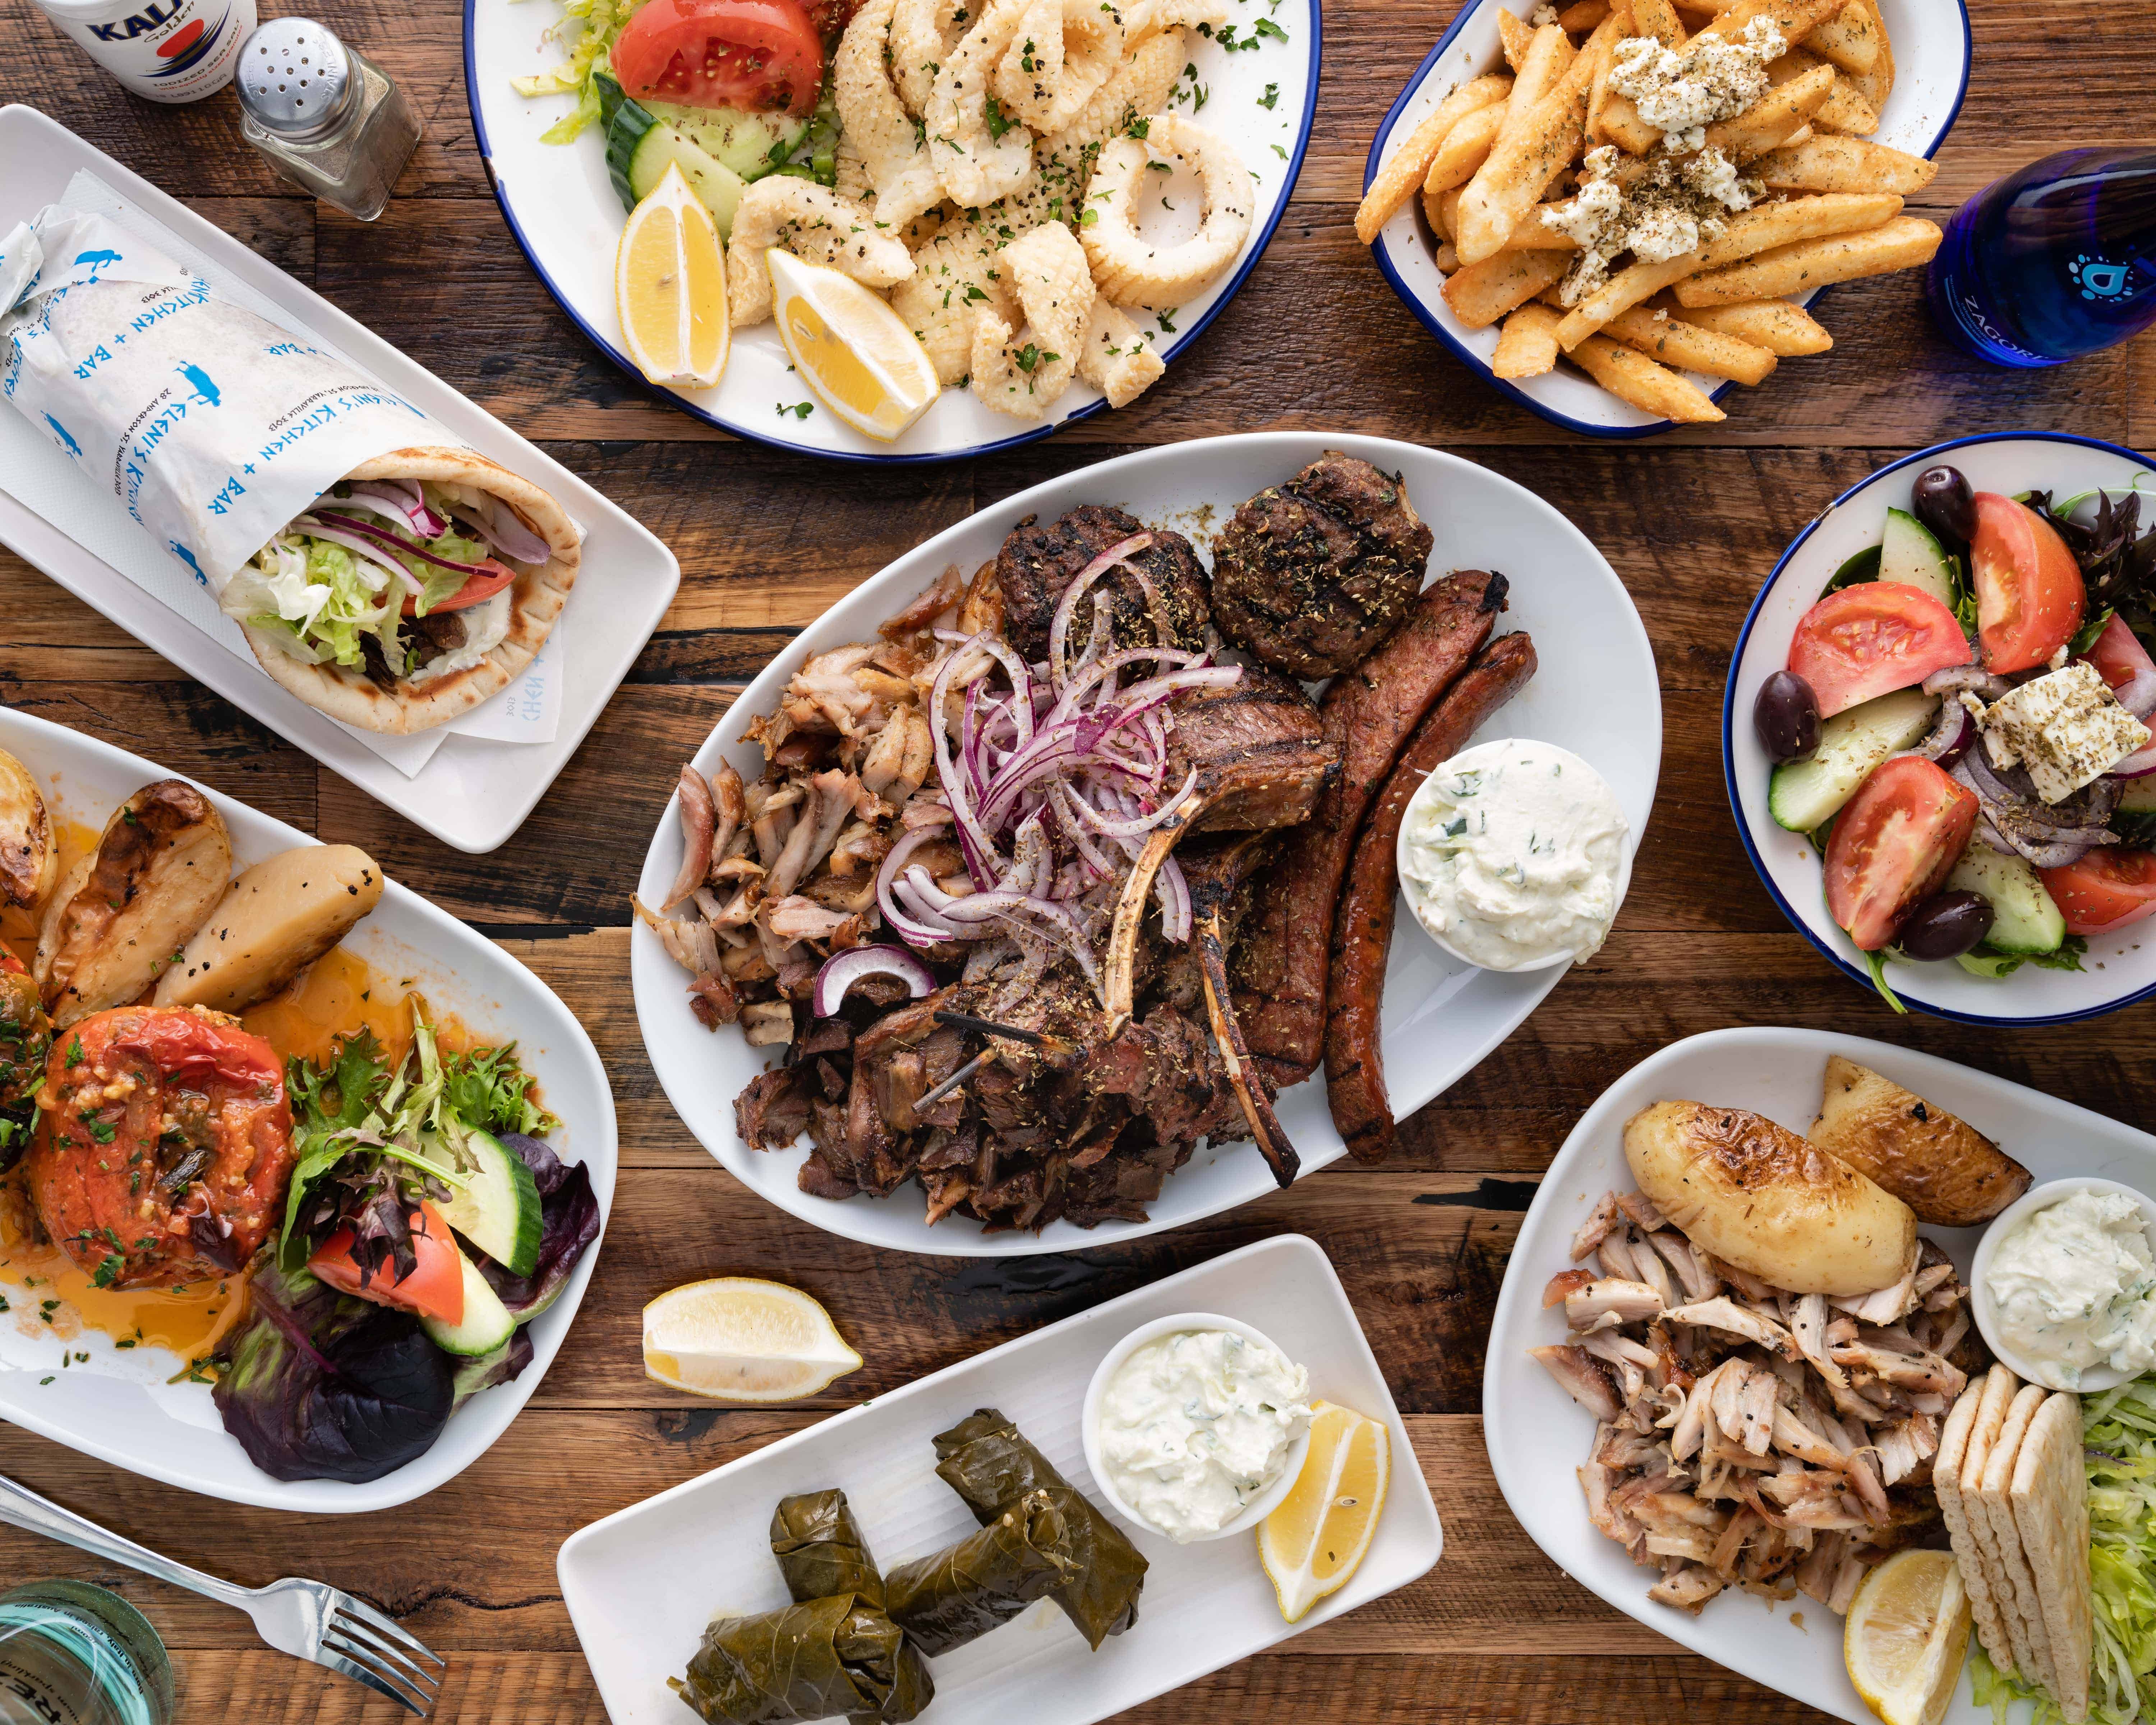 Table with authentic Greek dishes including gemista, gyros, souvlaki, feta fries, greek salad, dolmades and fired calamari